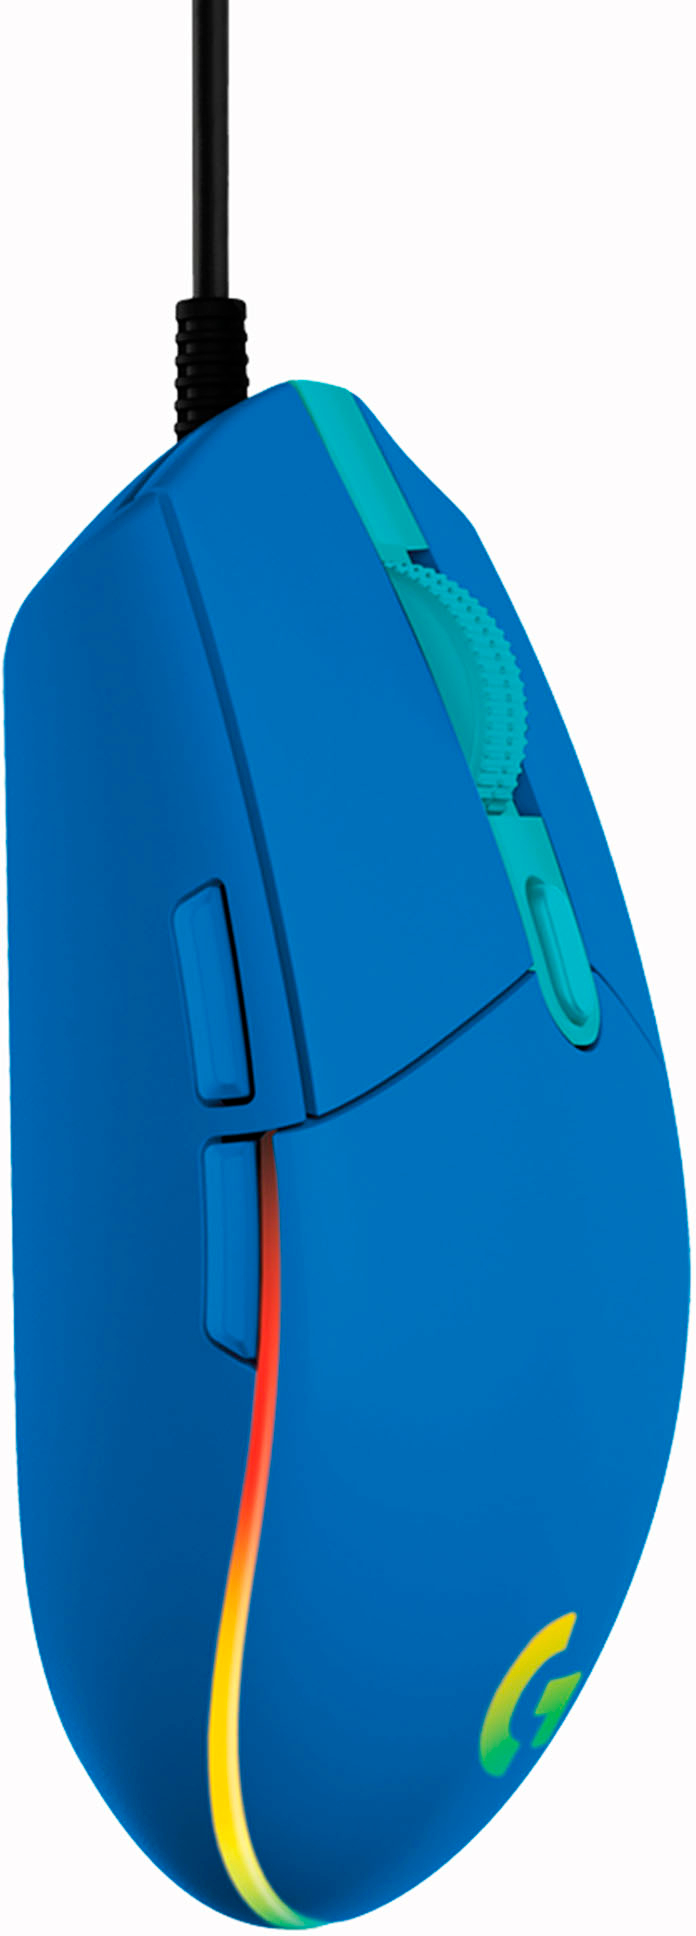 GAMING MOUSE Logitech G203 LIGHTSYNC RGB 6-button Design 8000 DPI WHITE TS